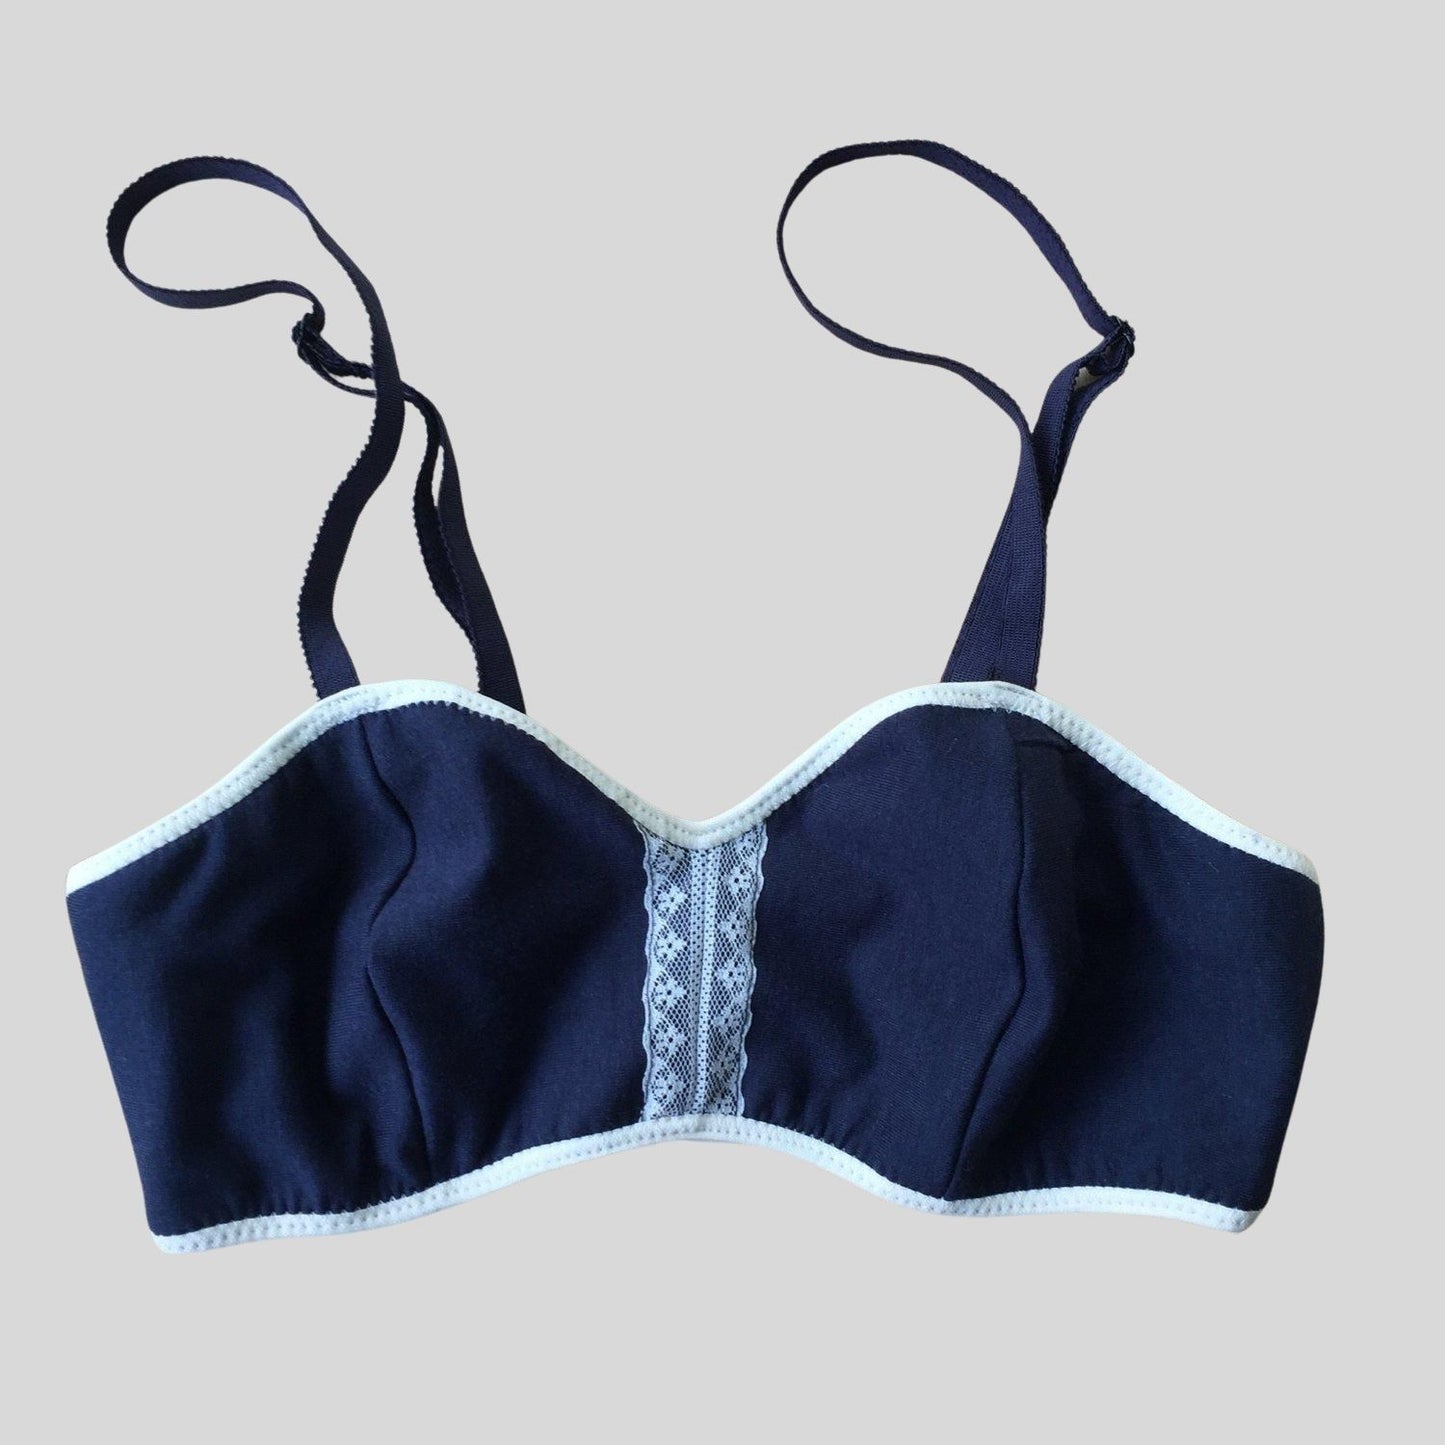 Merino wool womens bras  Shop wool lingerie for women from Canada – econica